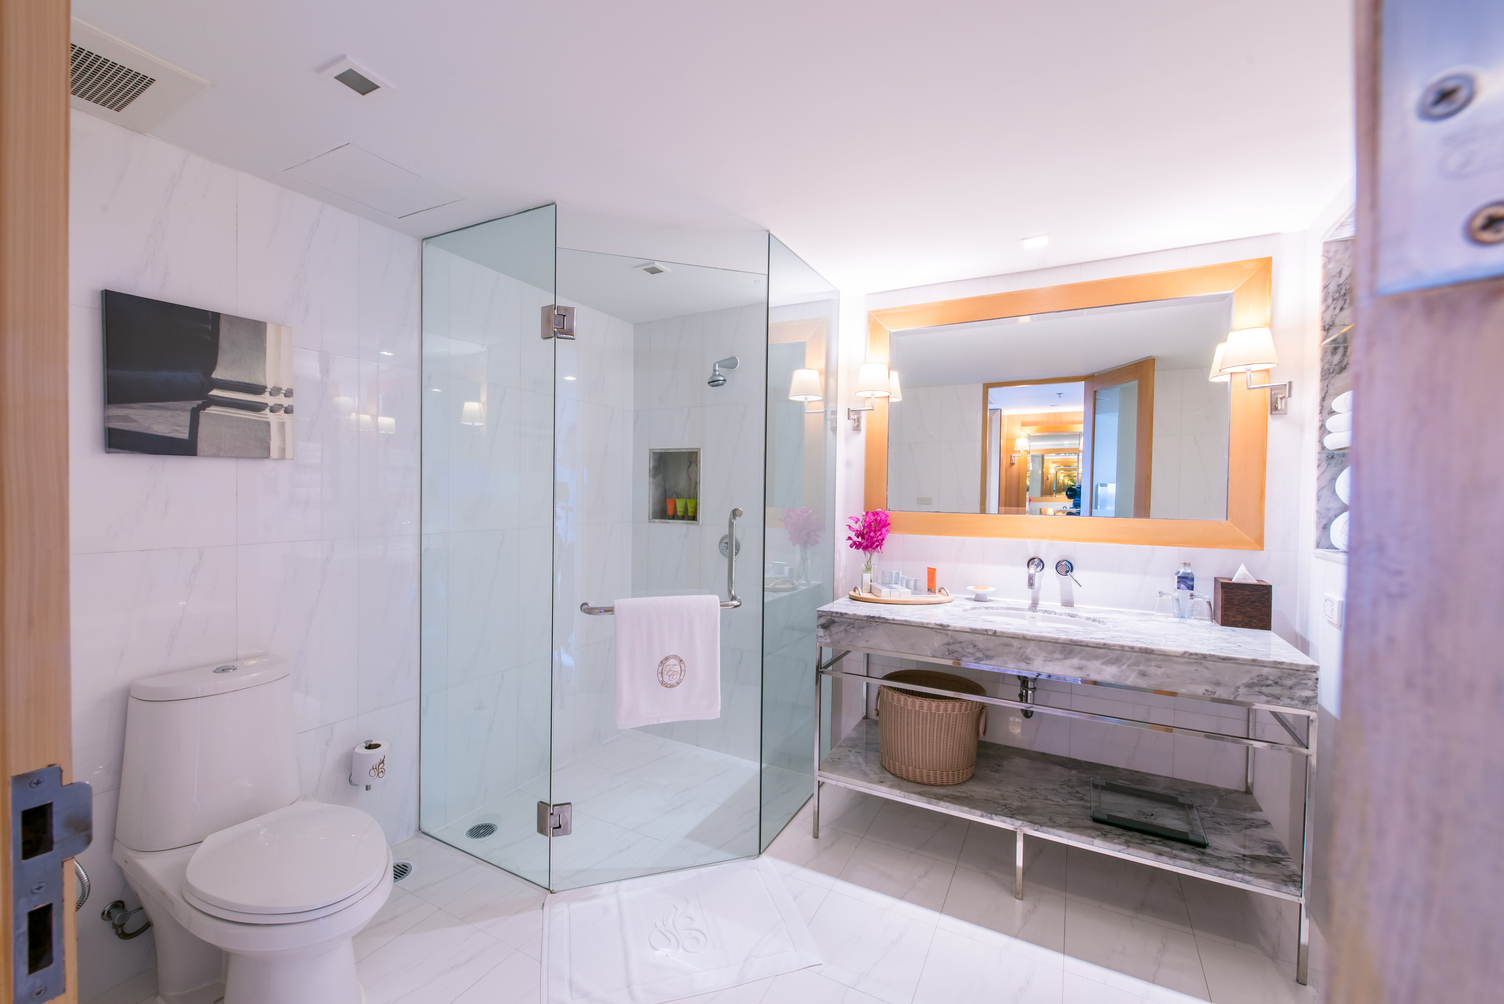 bathroom marble sink mirror corner shower and toilet